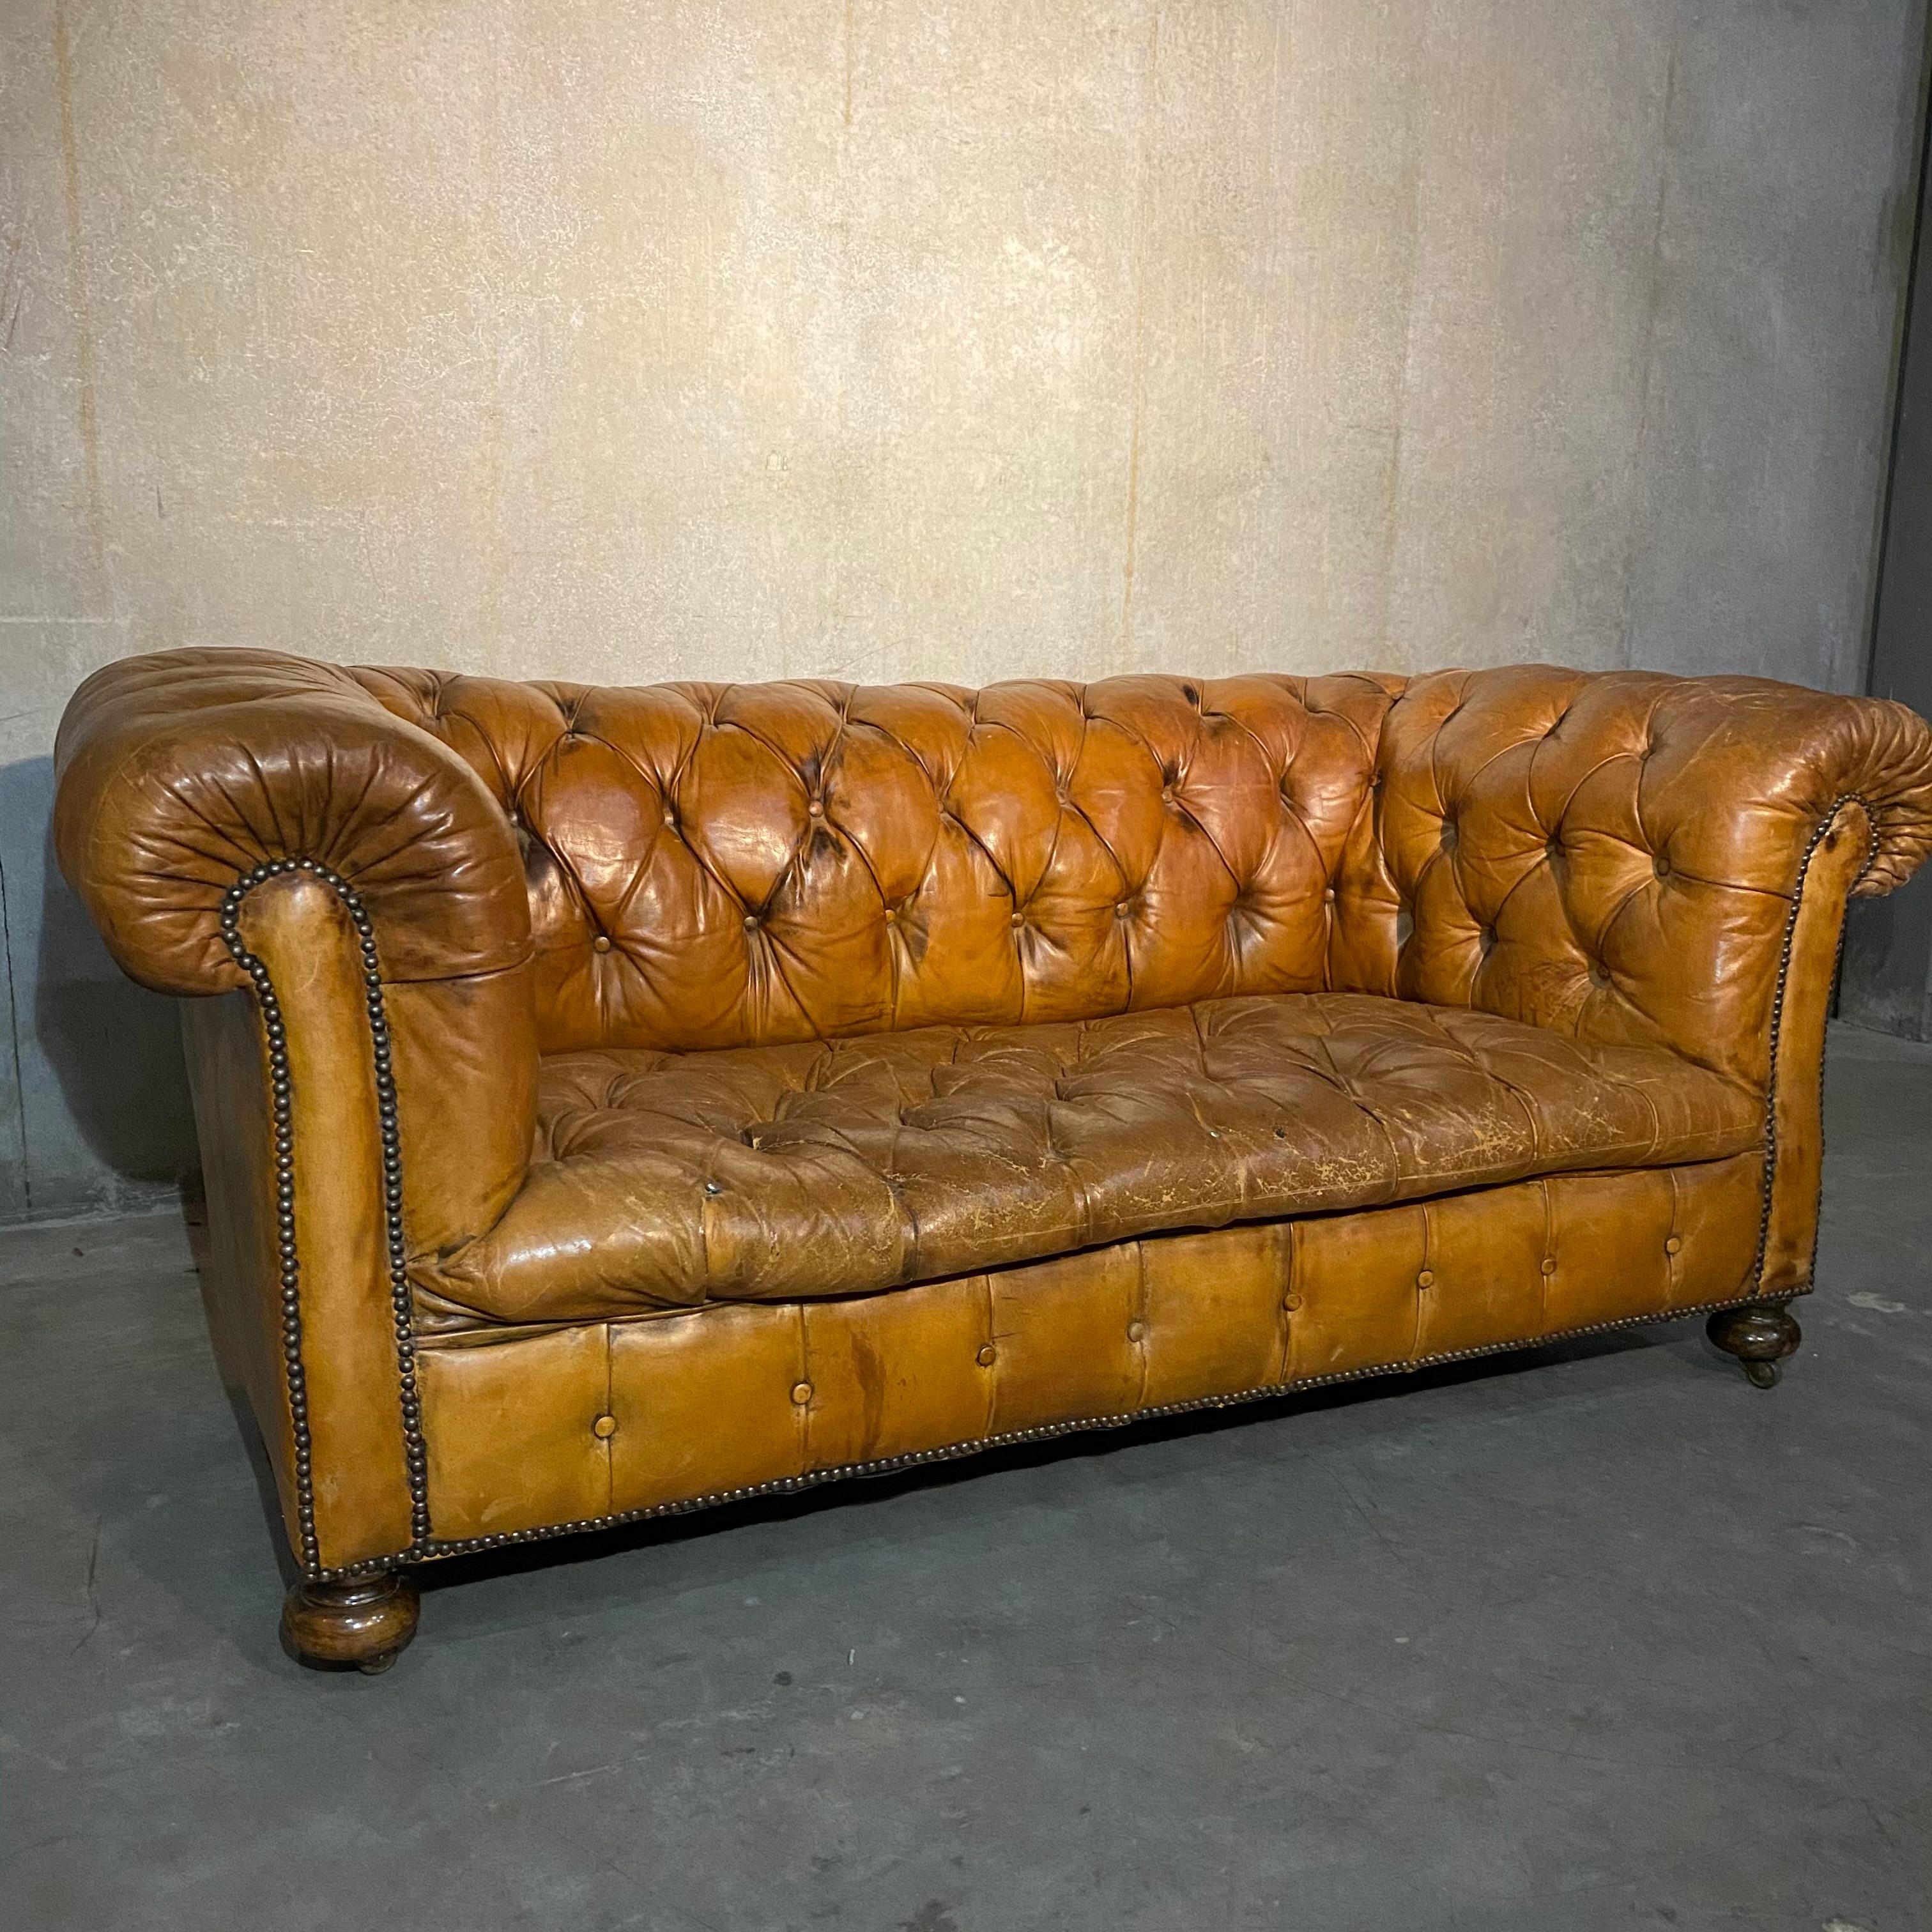 Early 20th Century 19th Century Original Tufted English Leather Sofa